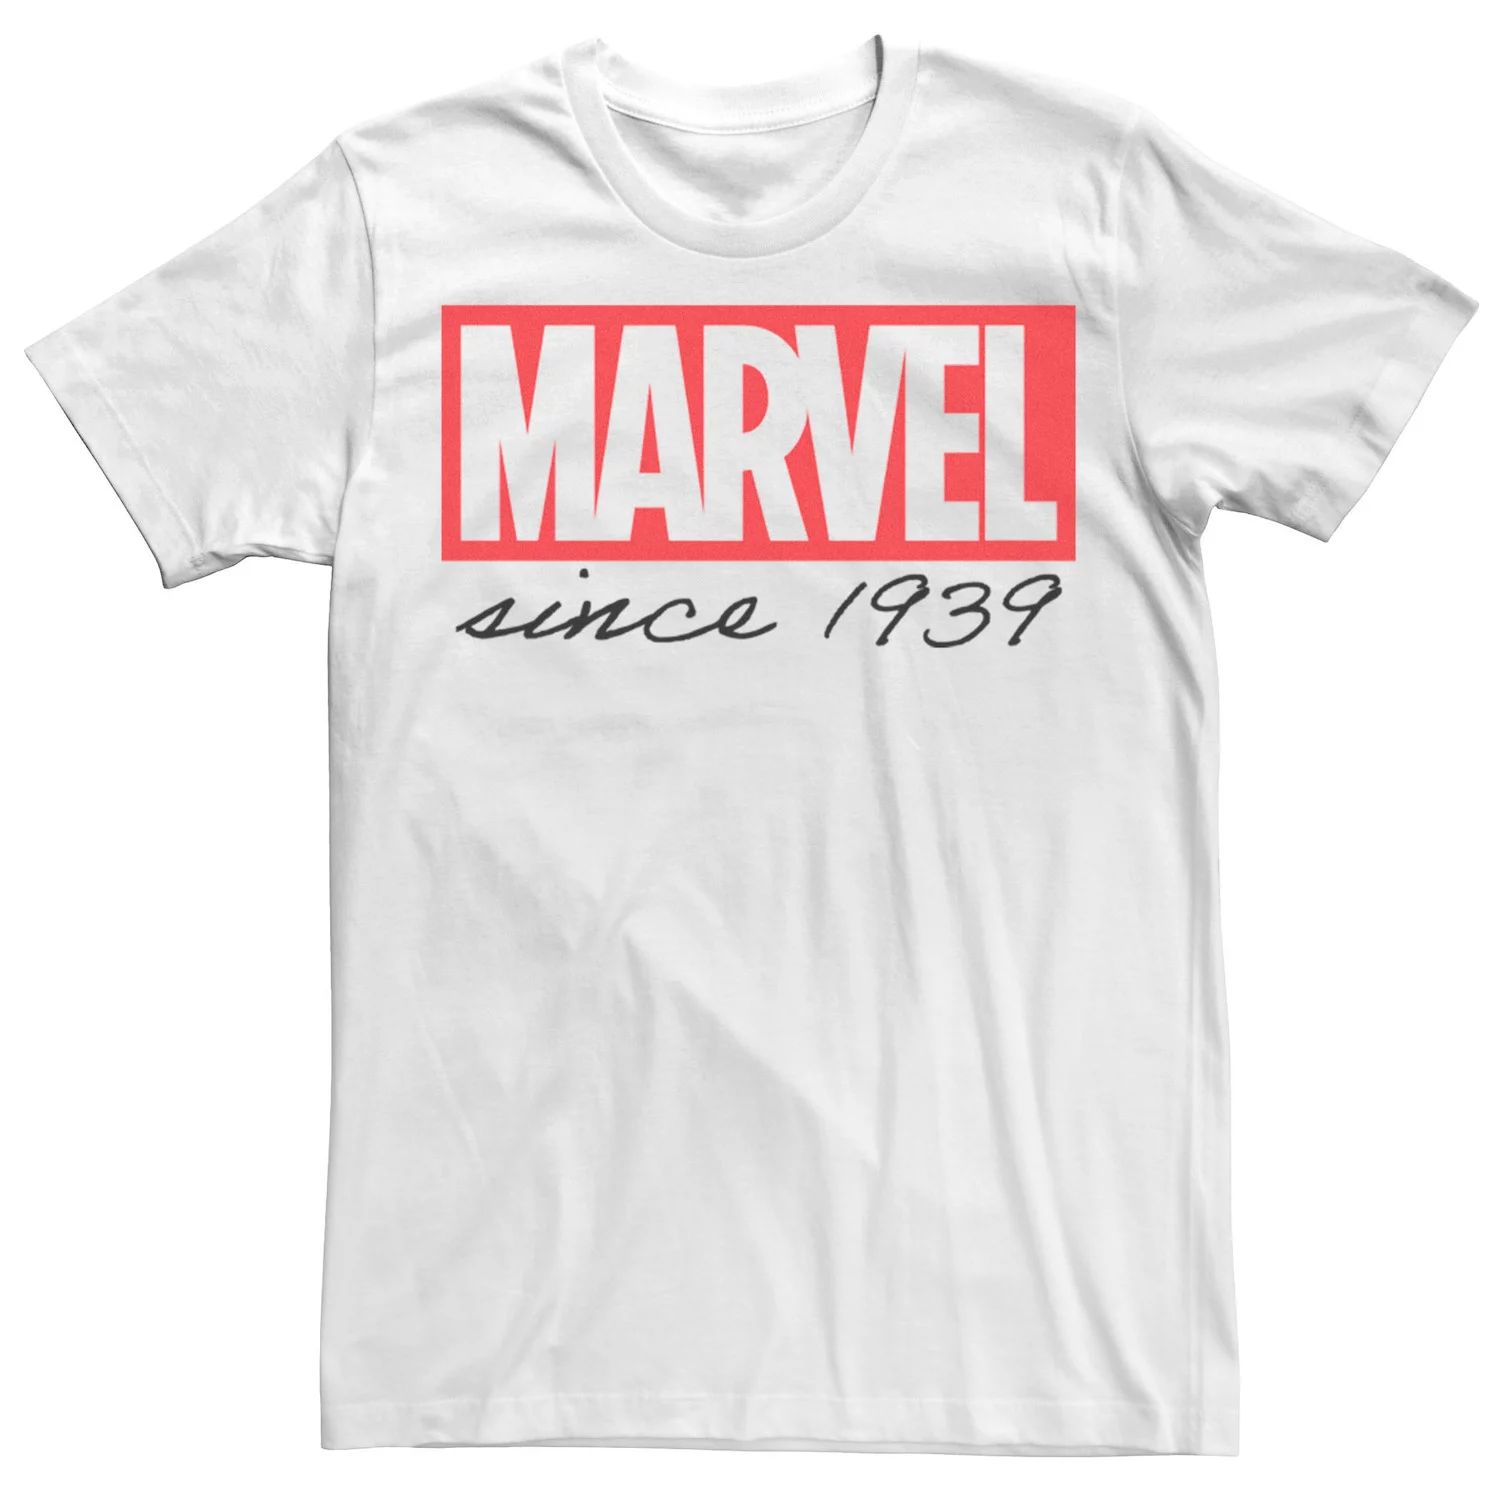 Мужская футболка с логотипом Marvel From Thirty Nine Licensed Character